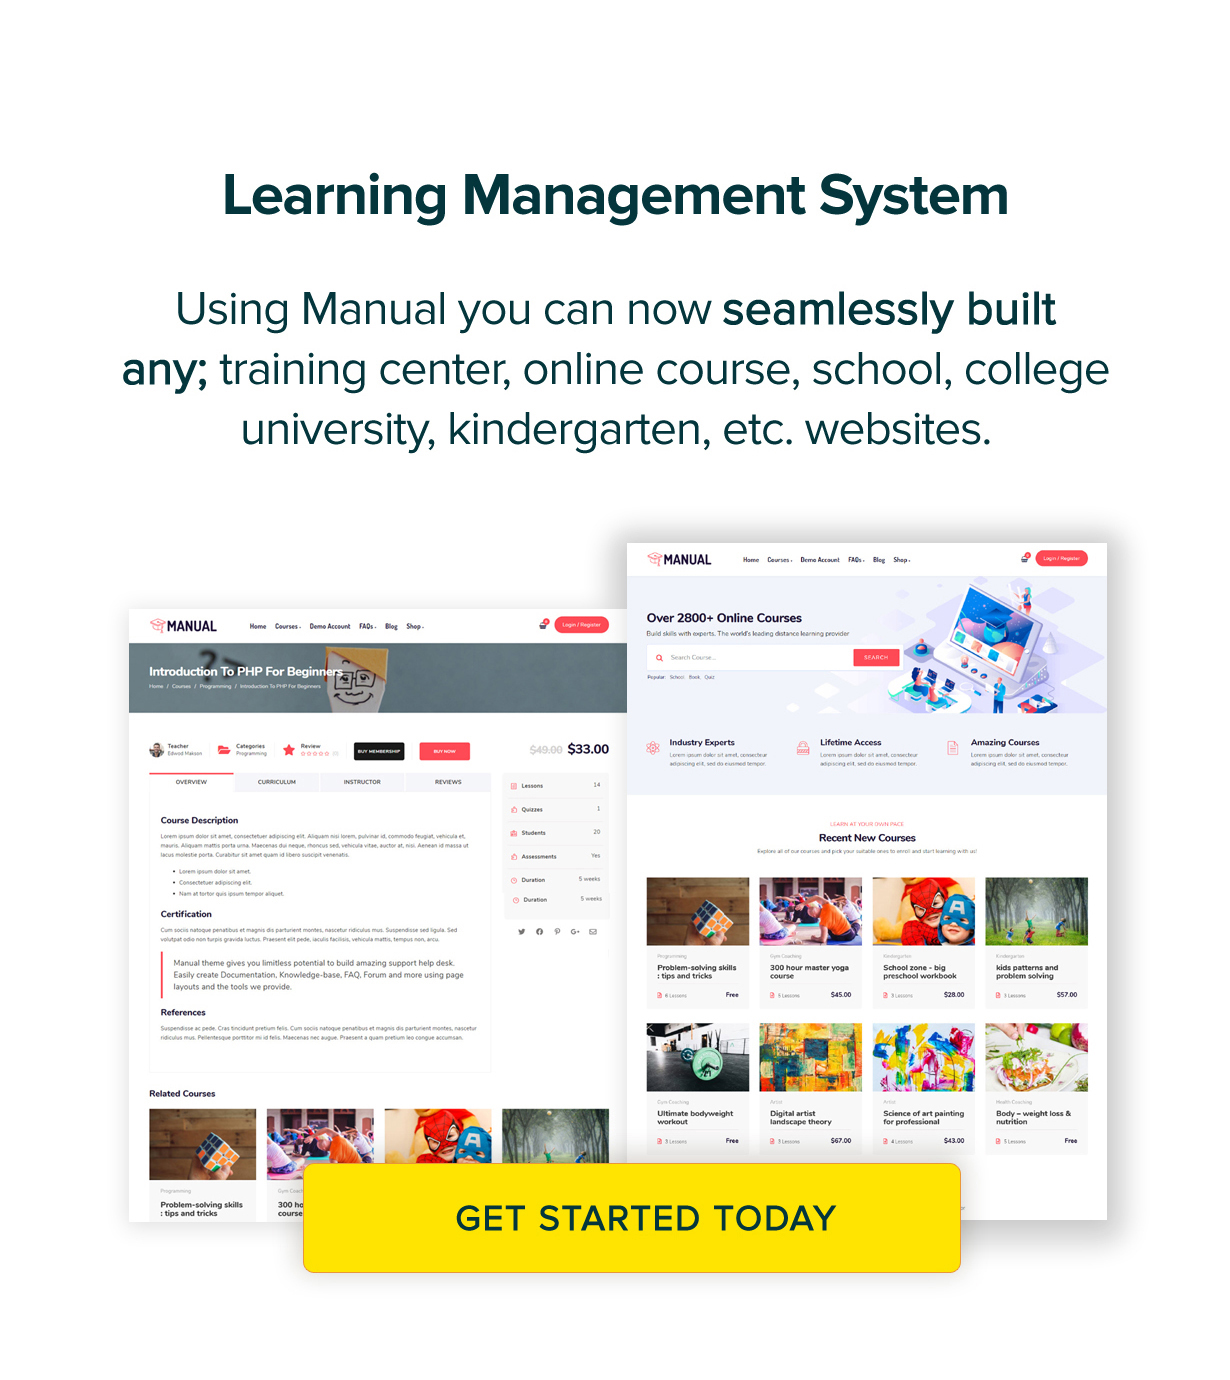 Manual – Documentation, Knowledge Base & Education WordPress Theme